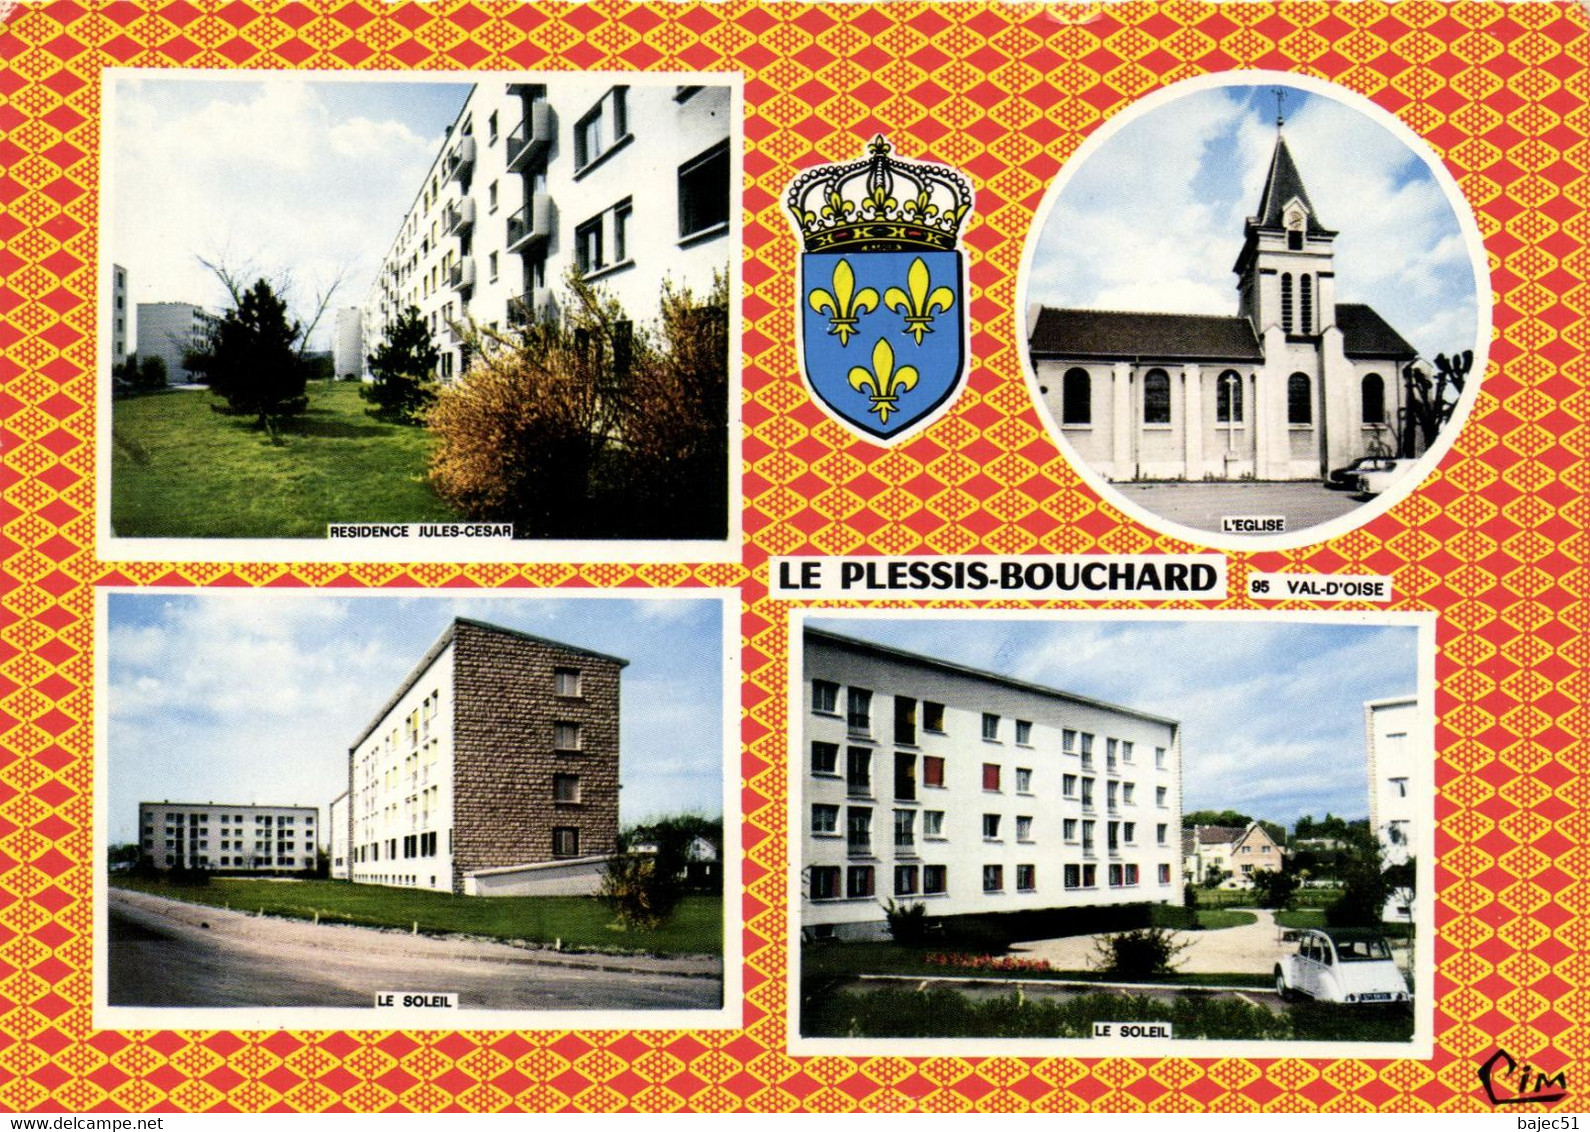 Le Plessis Bouchard - Le Plessis Bouchard